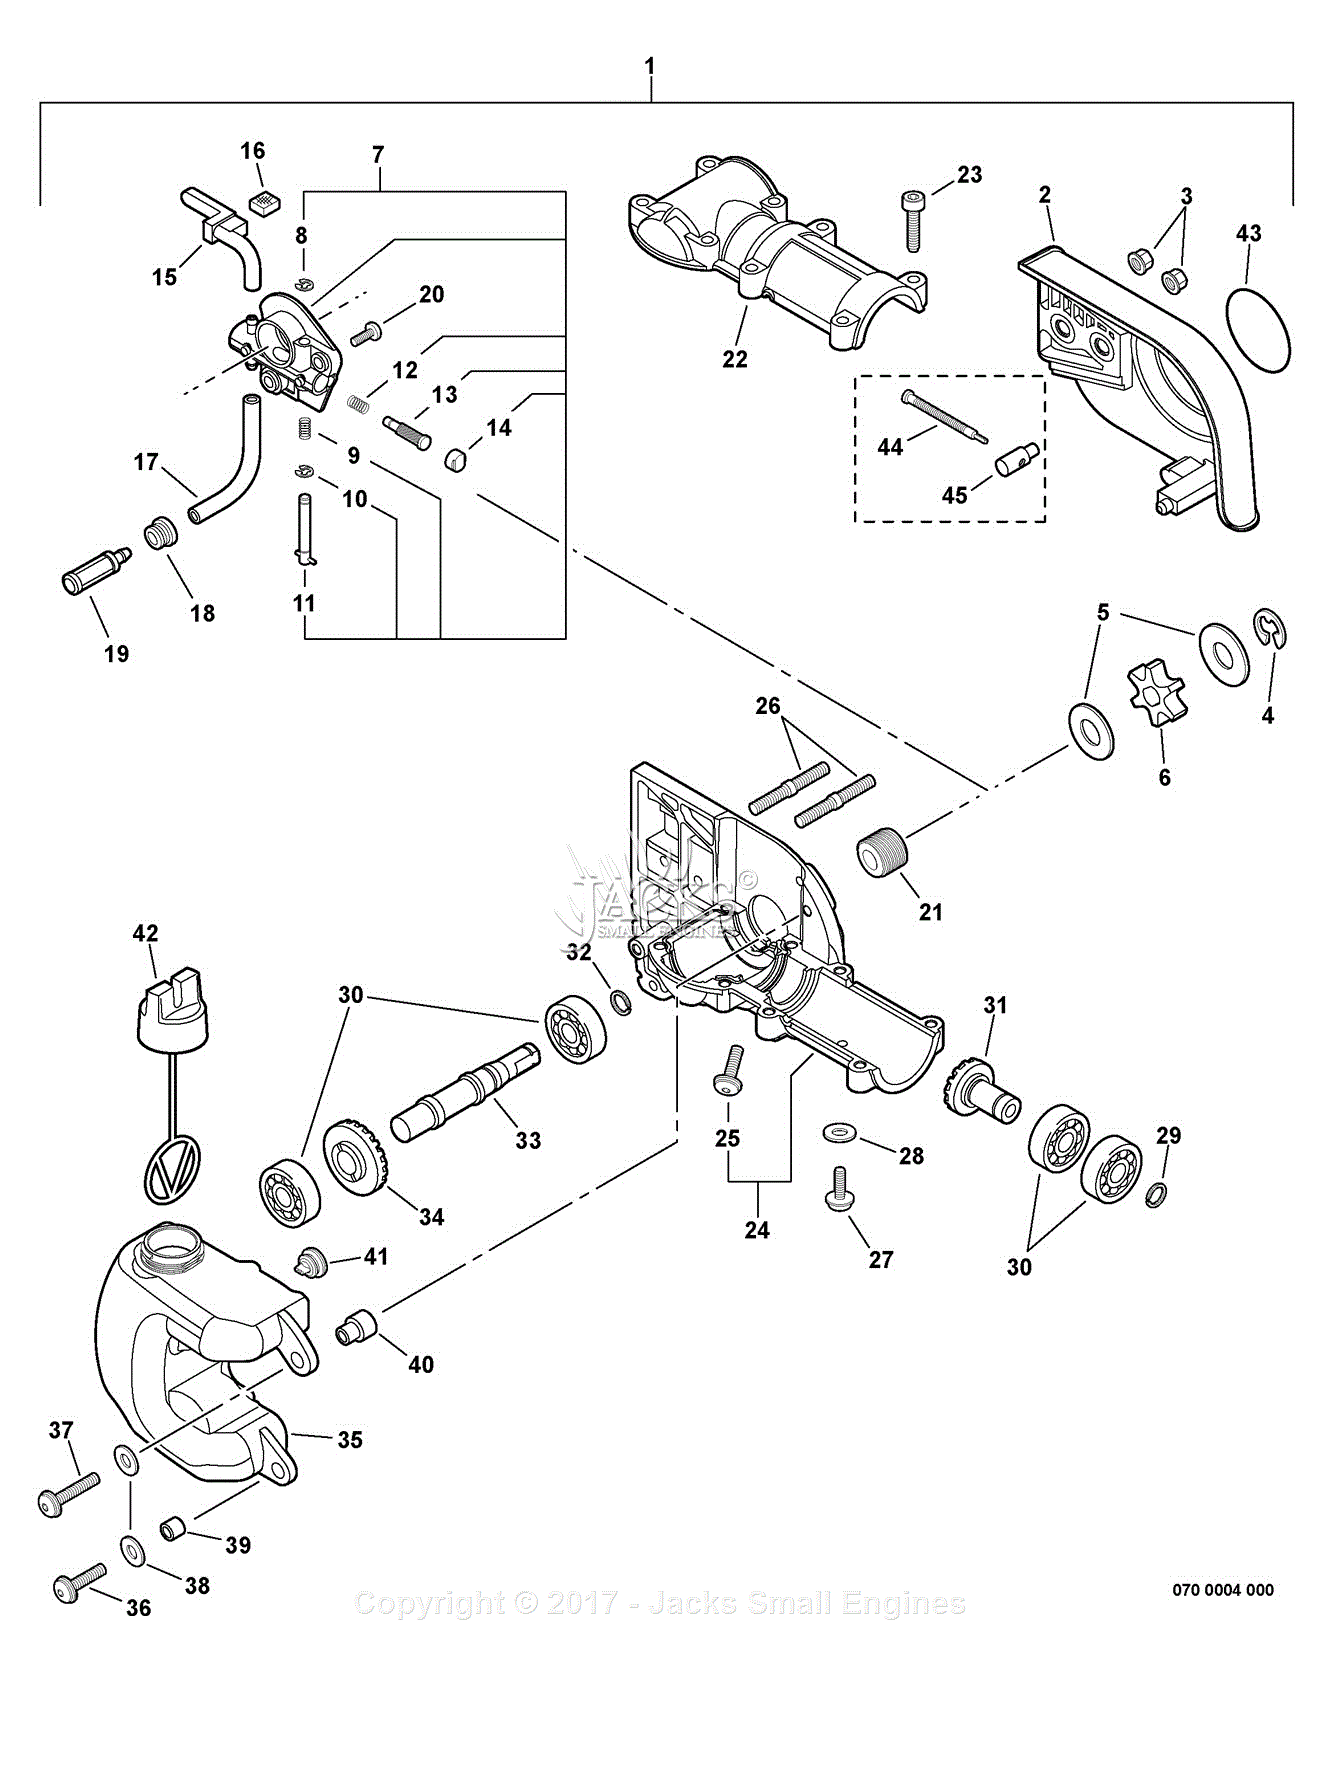 Echo Power Pruner Parts Diagram - Drivenheisenberg